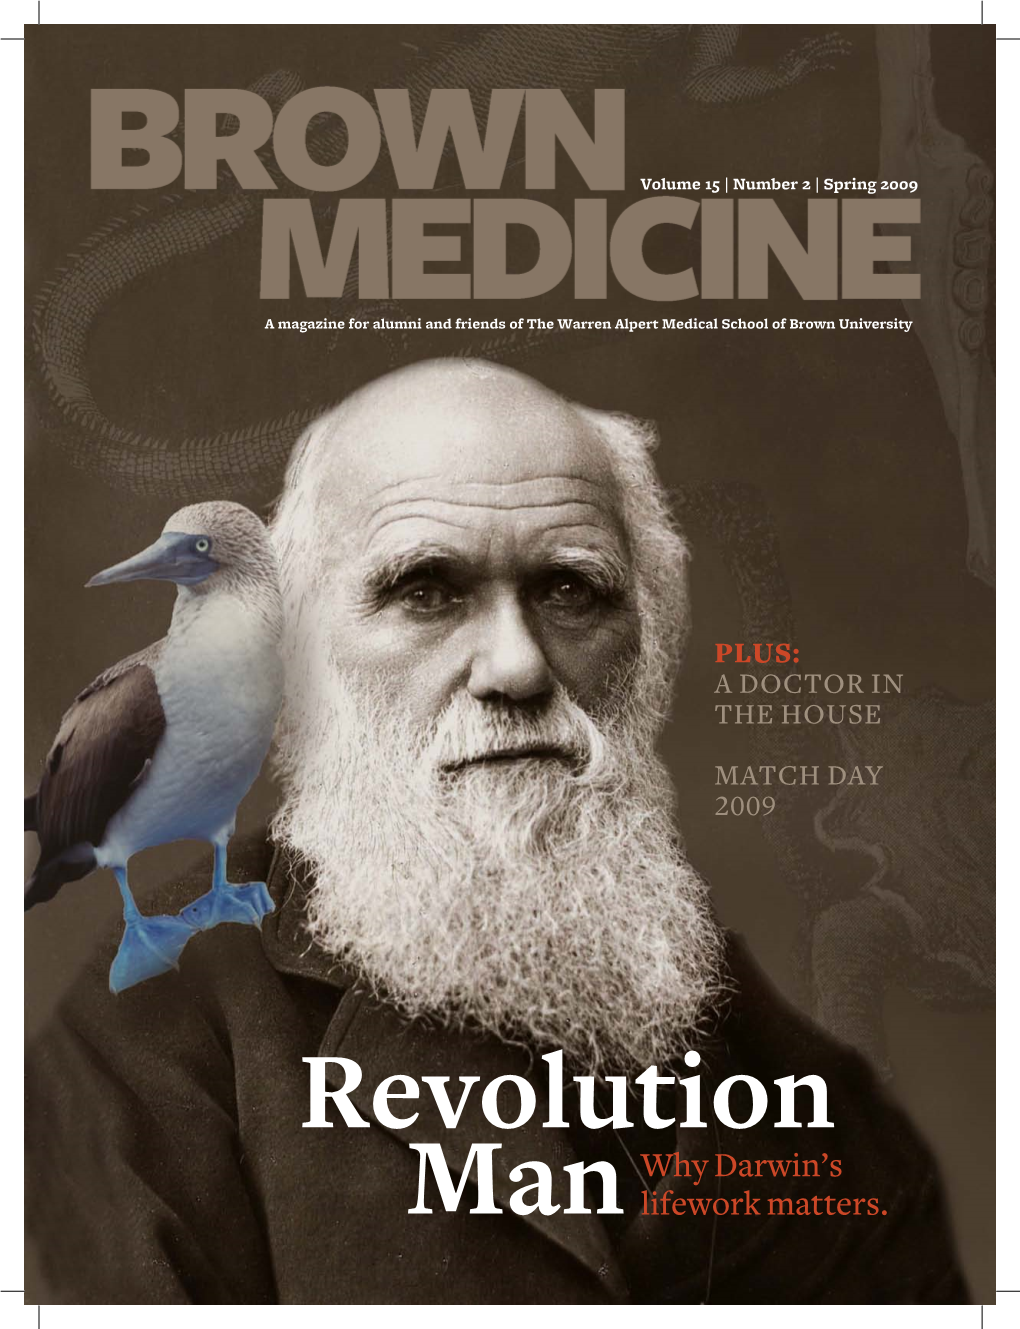 Man Why Darwin's Lifework Matters